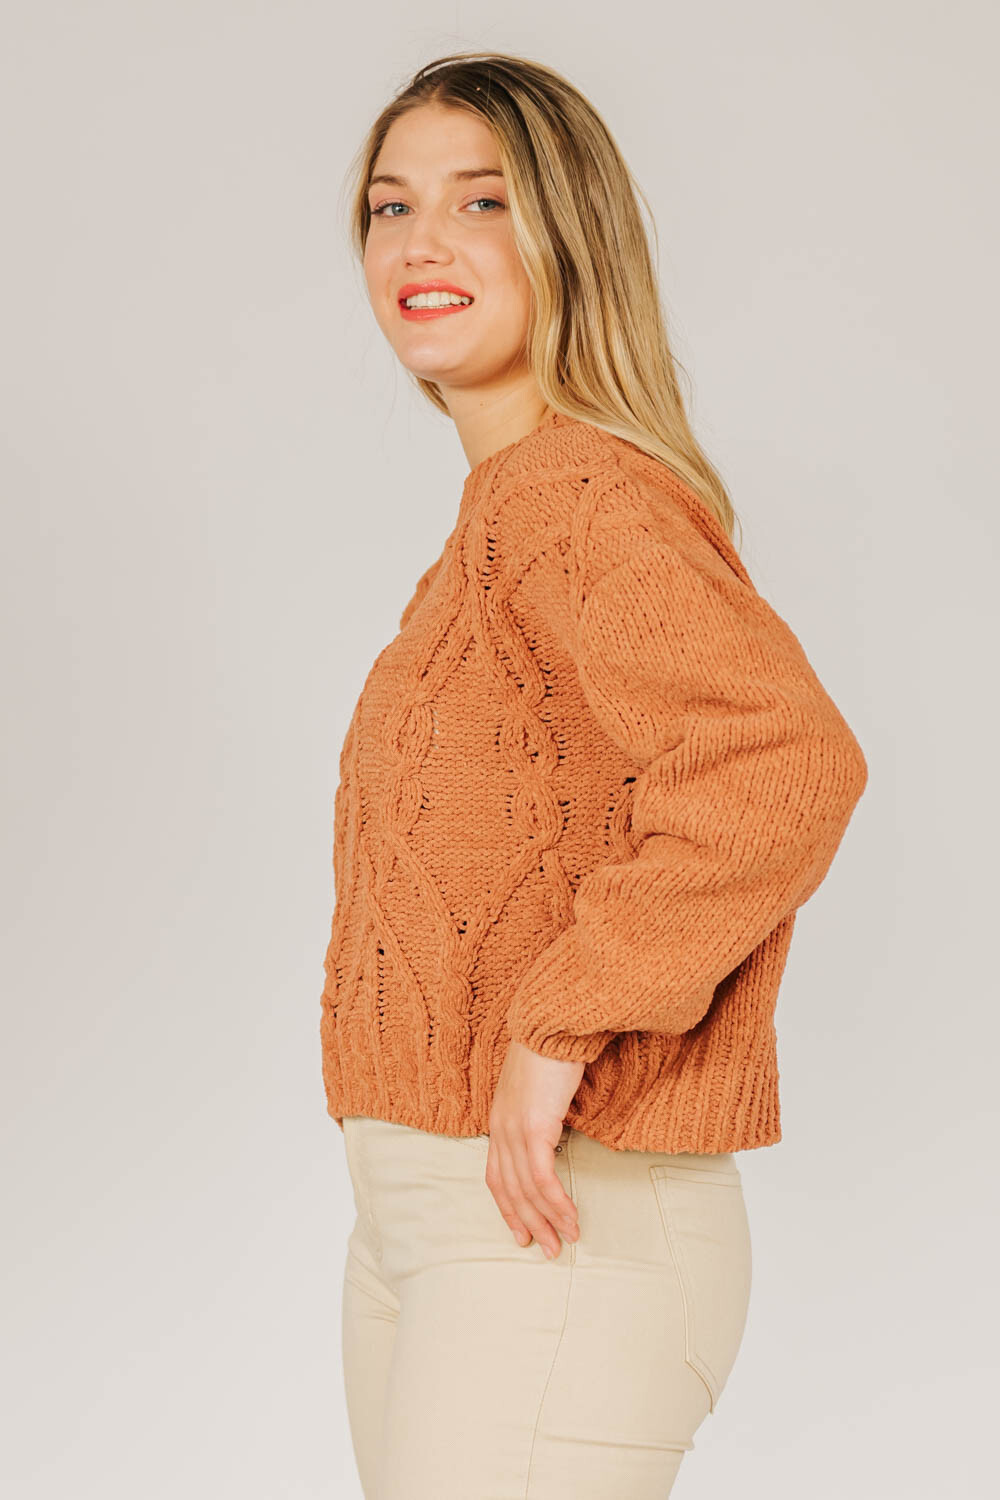 Sweater Nambucca Cobre